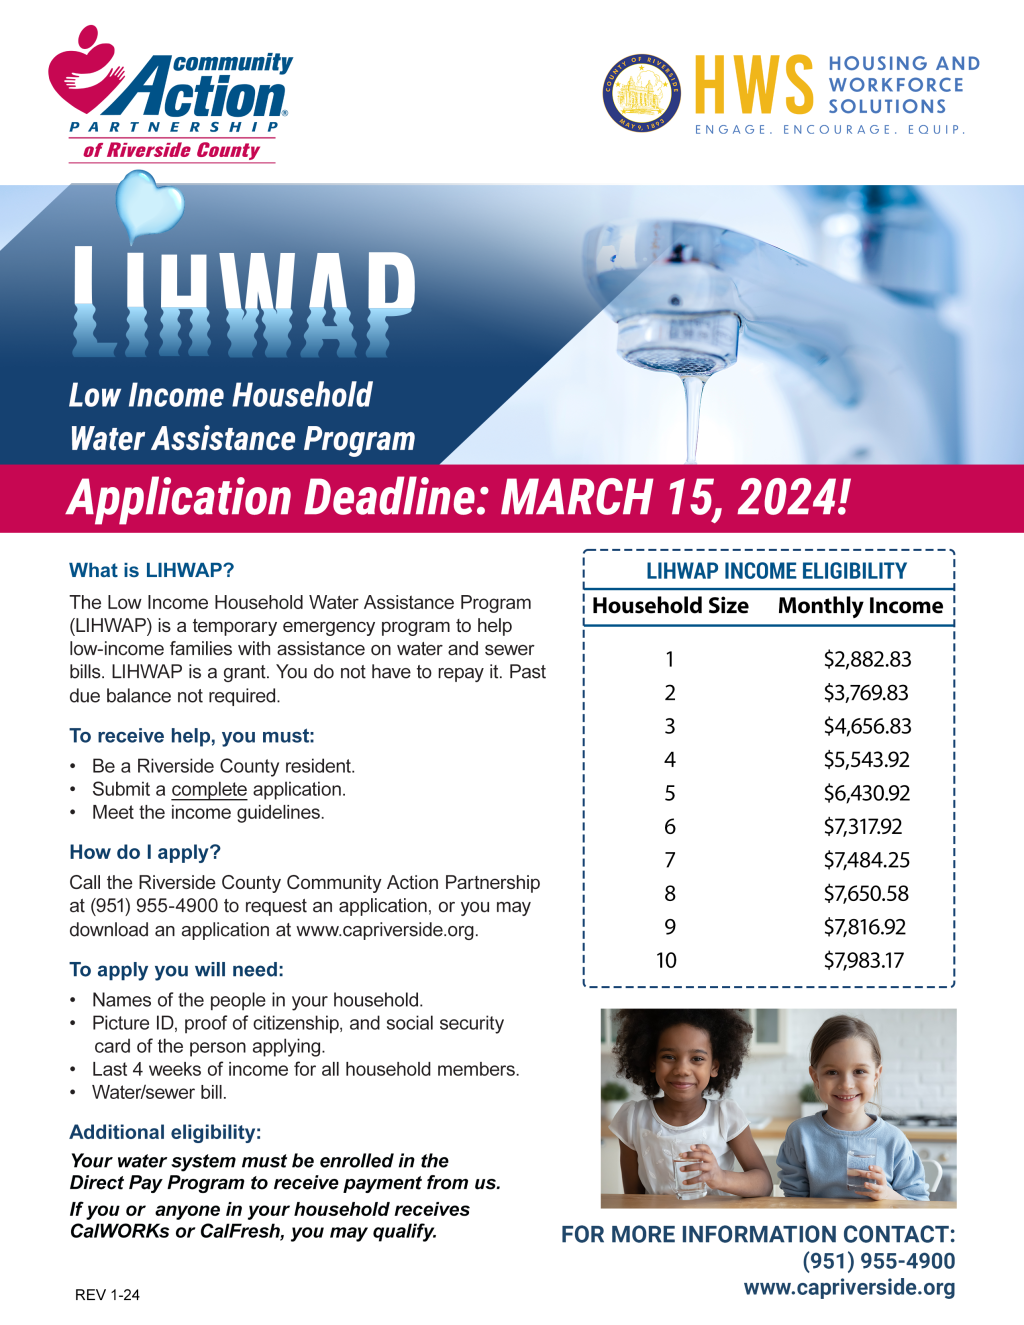 LIHWAP March 15, 2024 Deadline to Apply